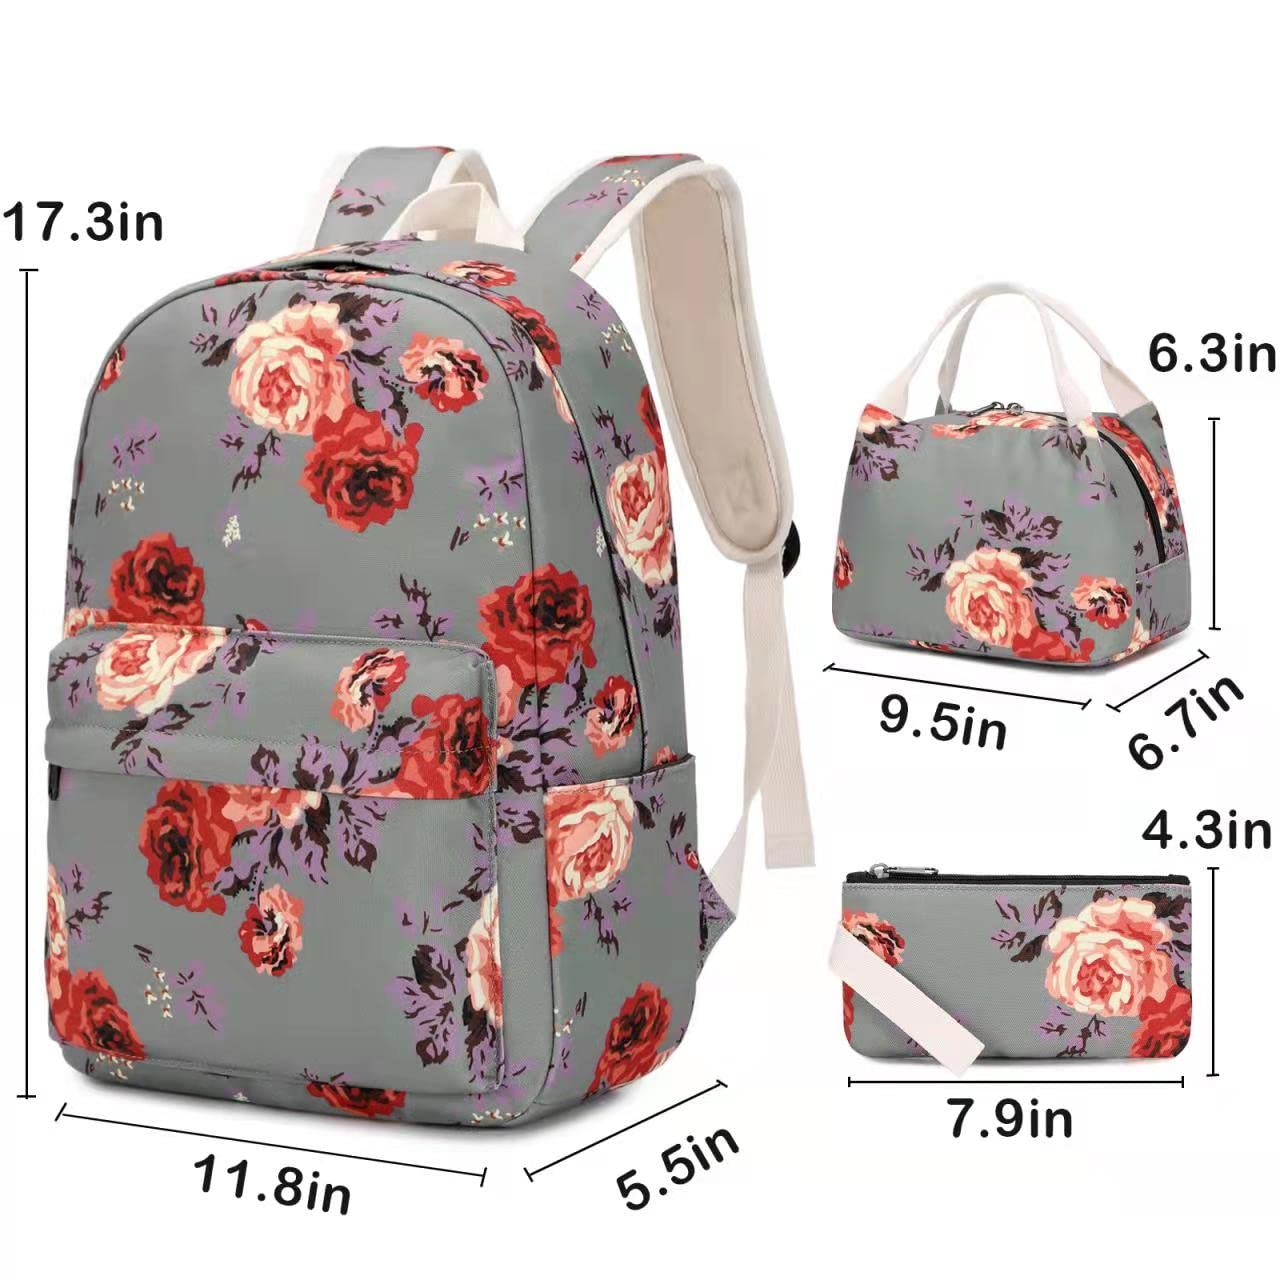 Goodking Canvas Backpack for Women Teen Girls School Rucksack College Bookbag Lady Travel Backpack 14inch Laptop Bag